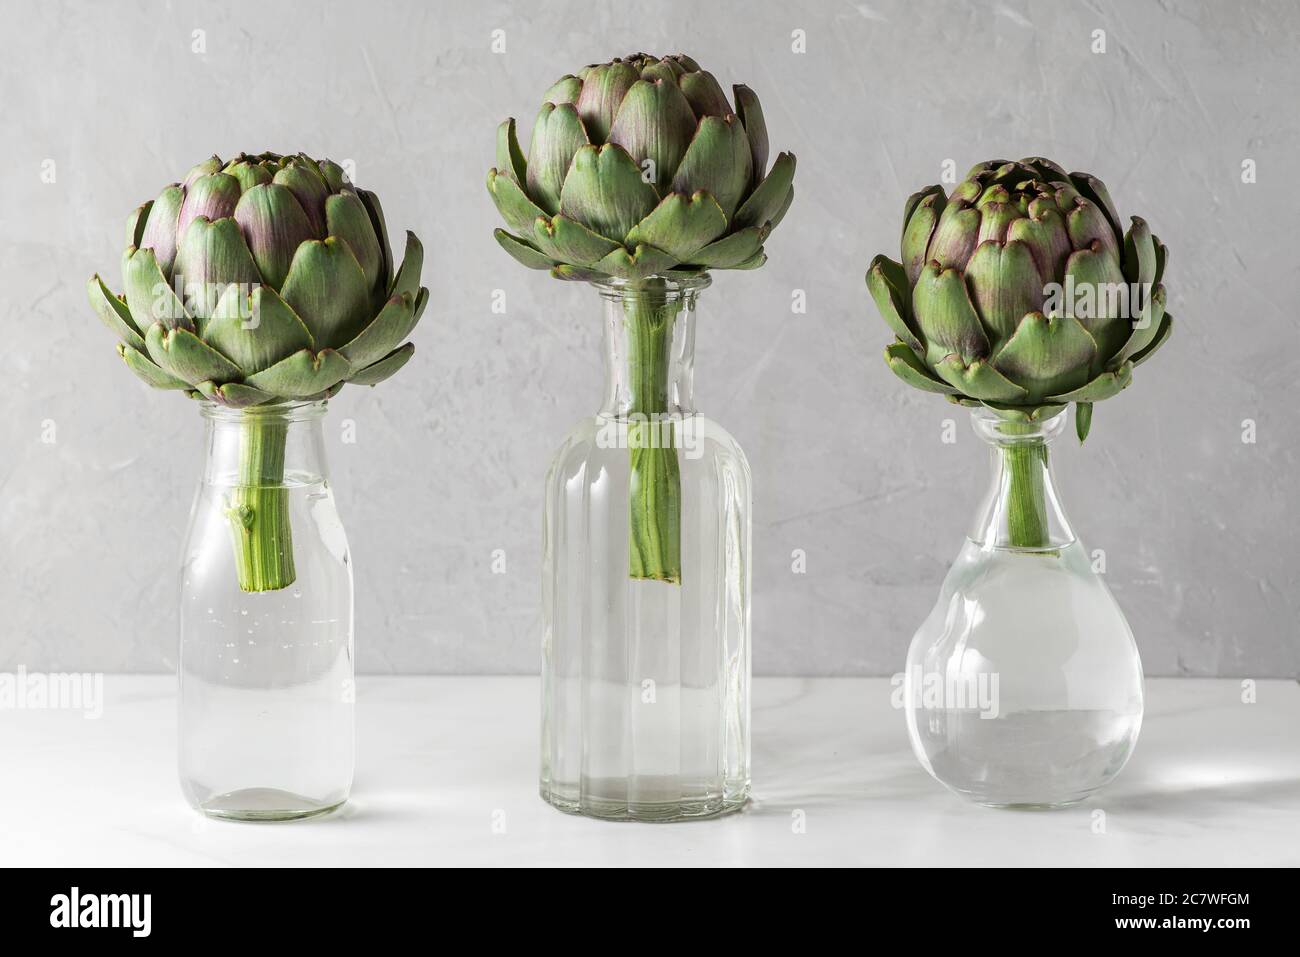 Artichoke vegetables in the bottles on white background. Creative modern food still life. Minimal concept Stock Photo